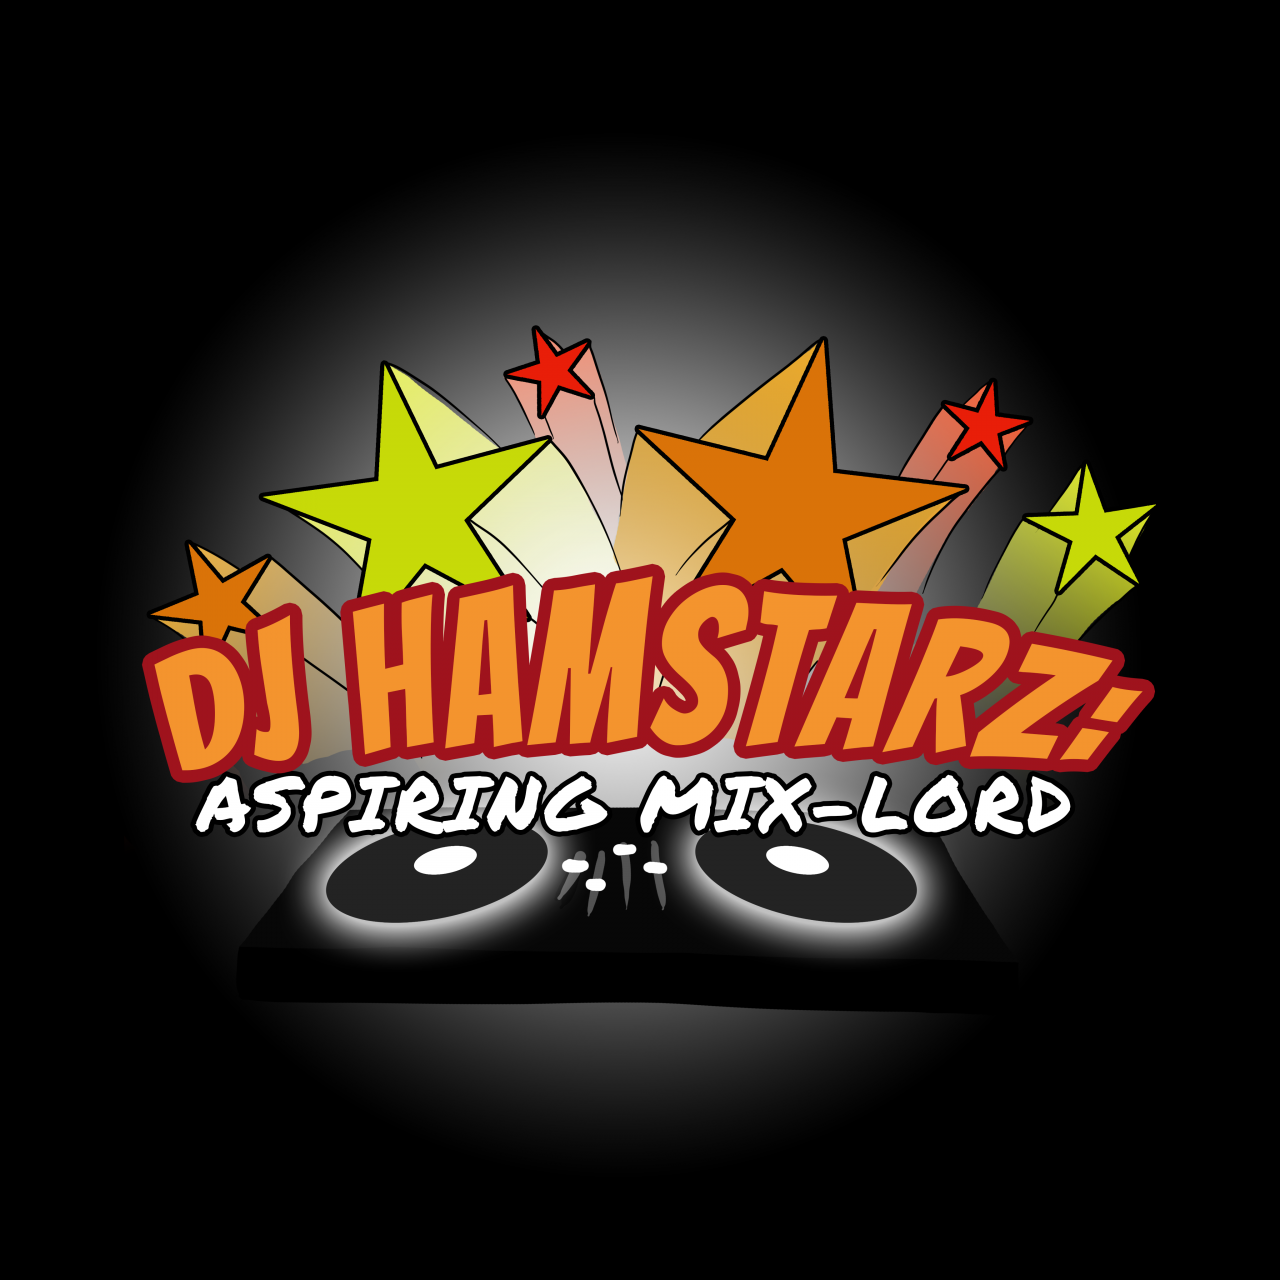 DJ Hamstarz: Aspiring Mix-Lord